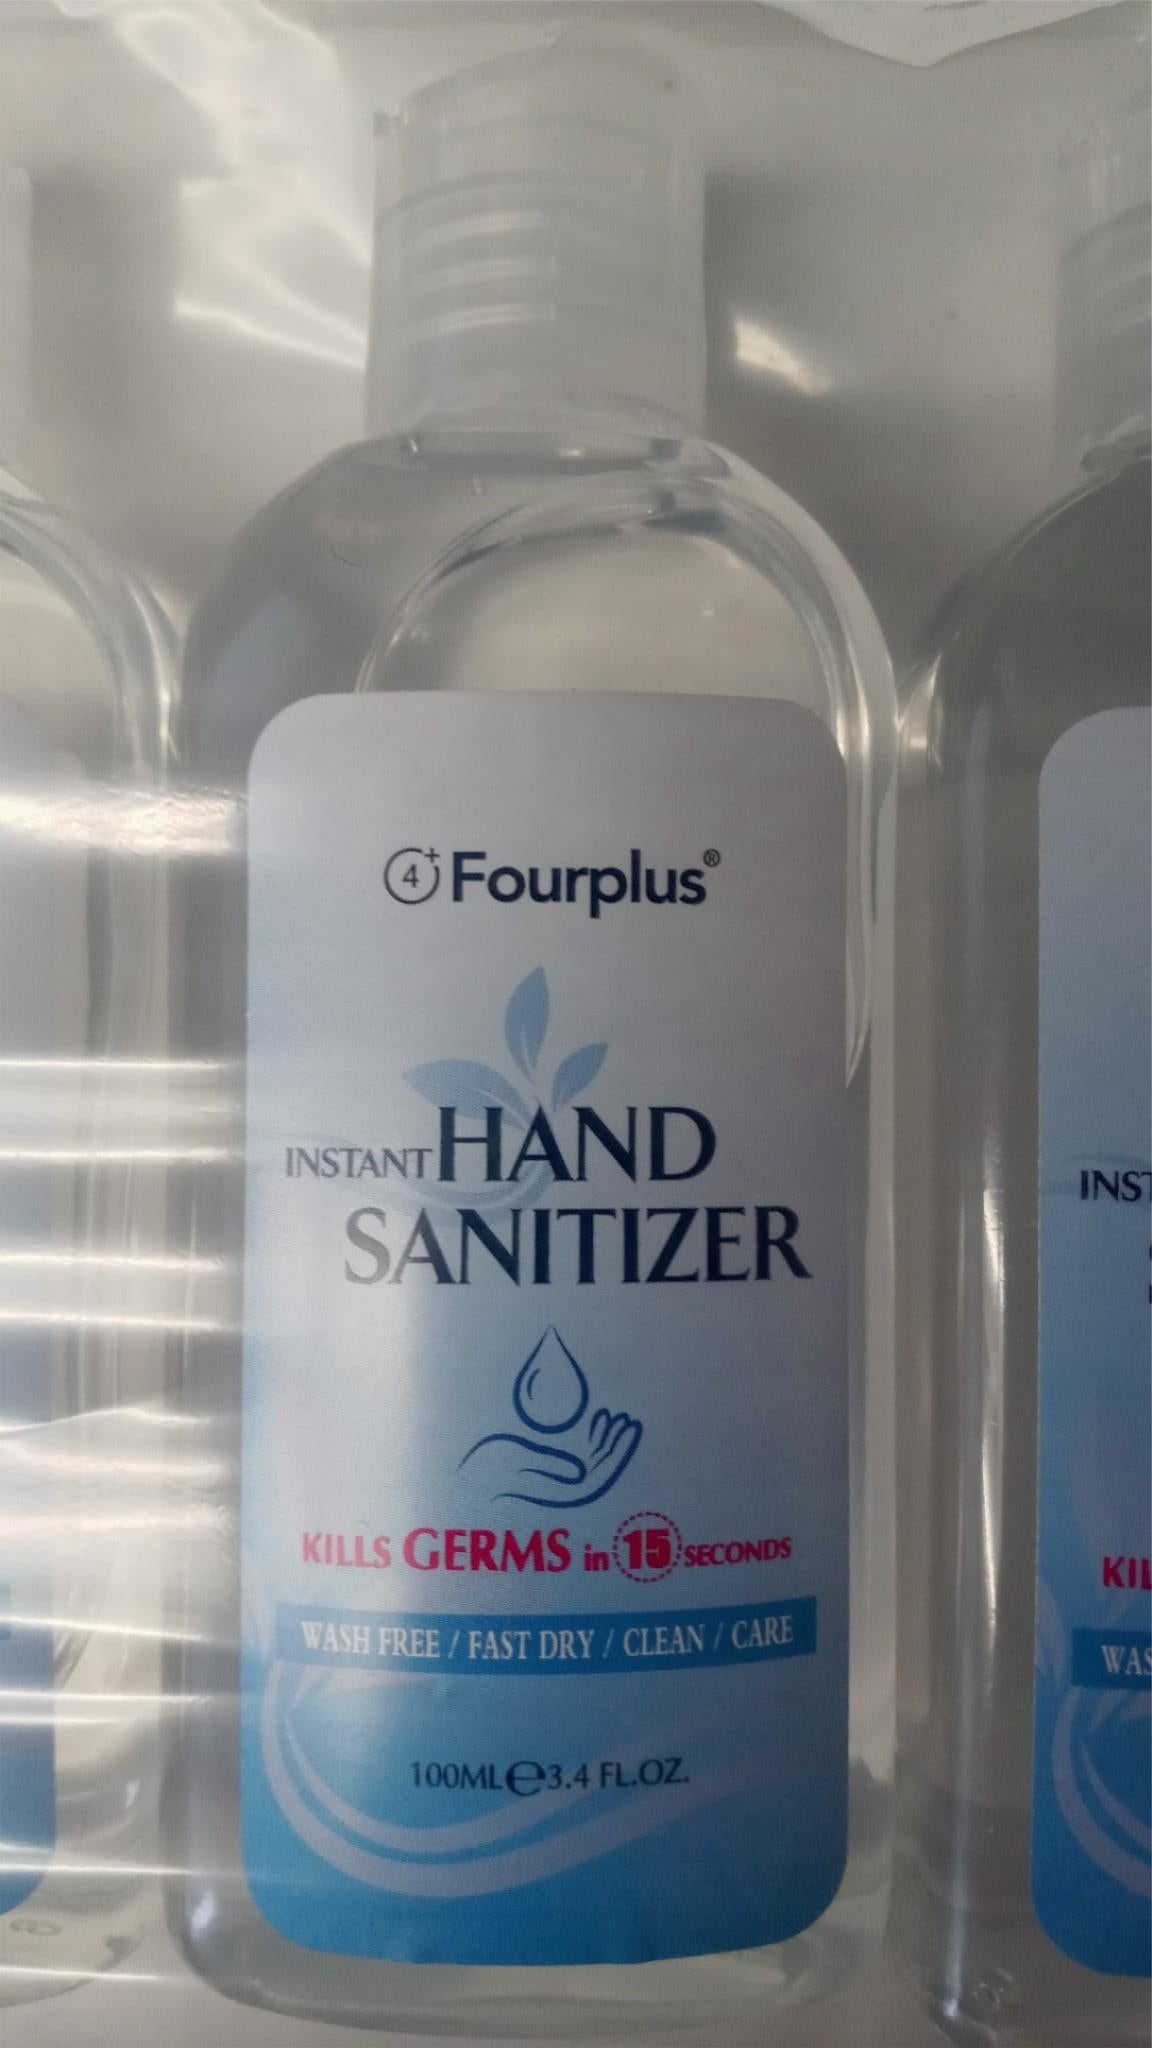 Fourplus Instant Hand Sanitizer 3.4oz 4 pack